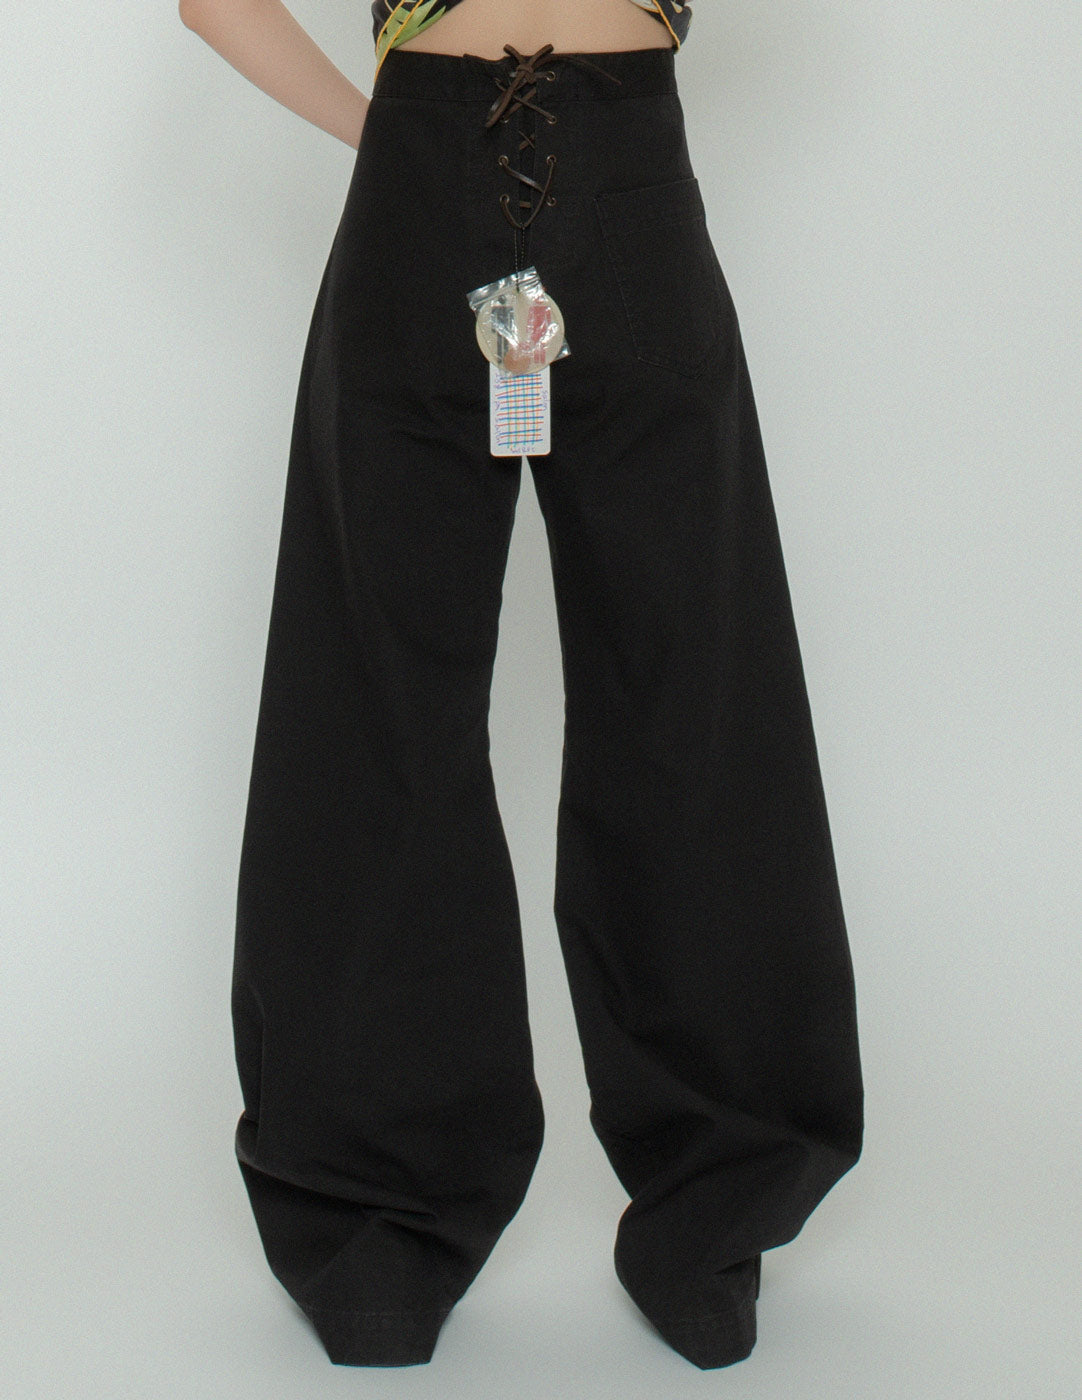 Jean Paul Gaultier structured cotton sailor trousers